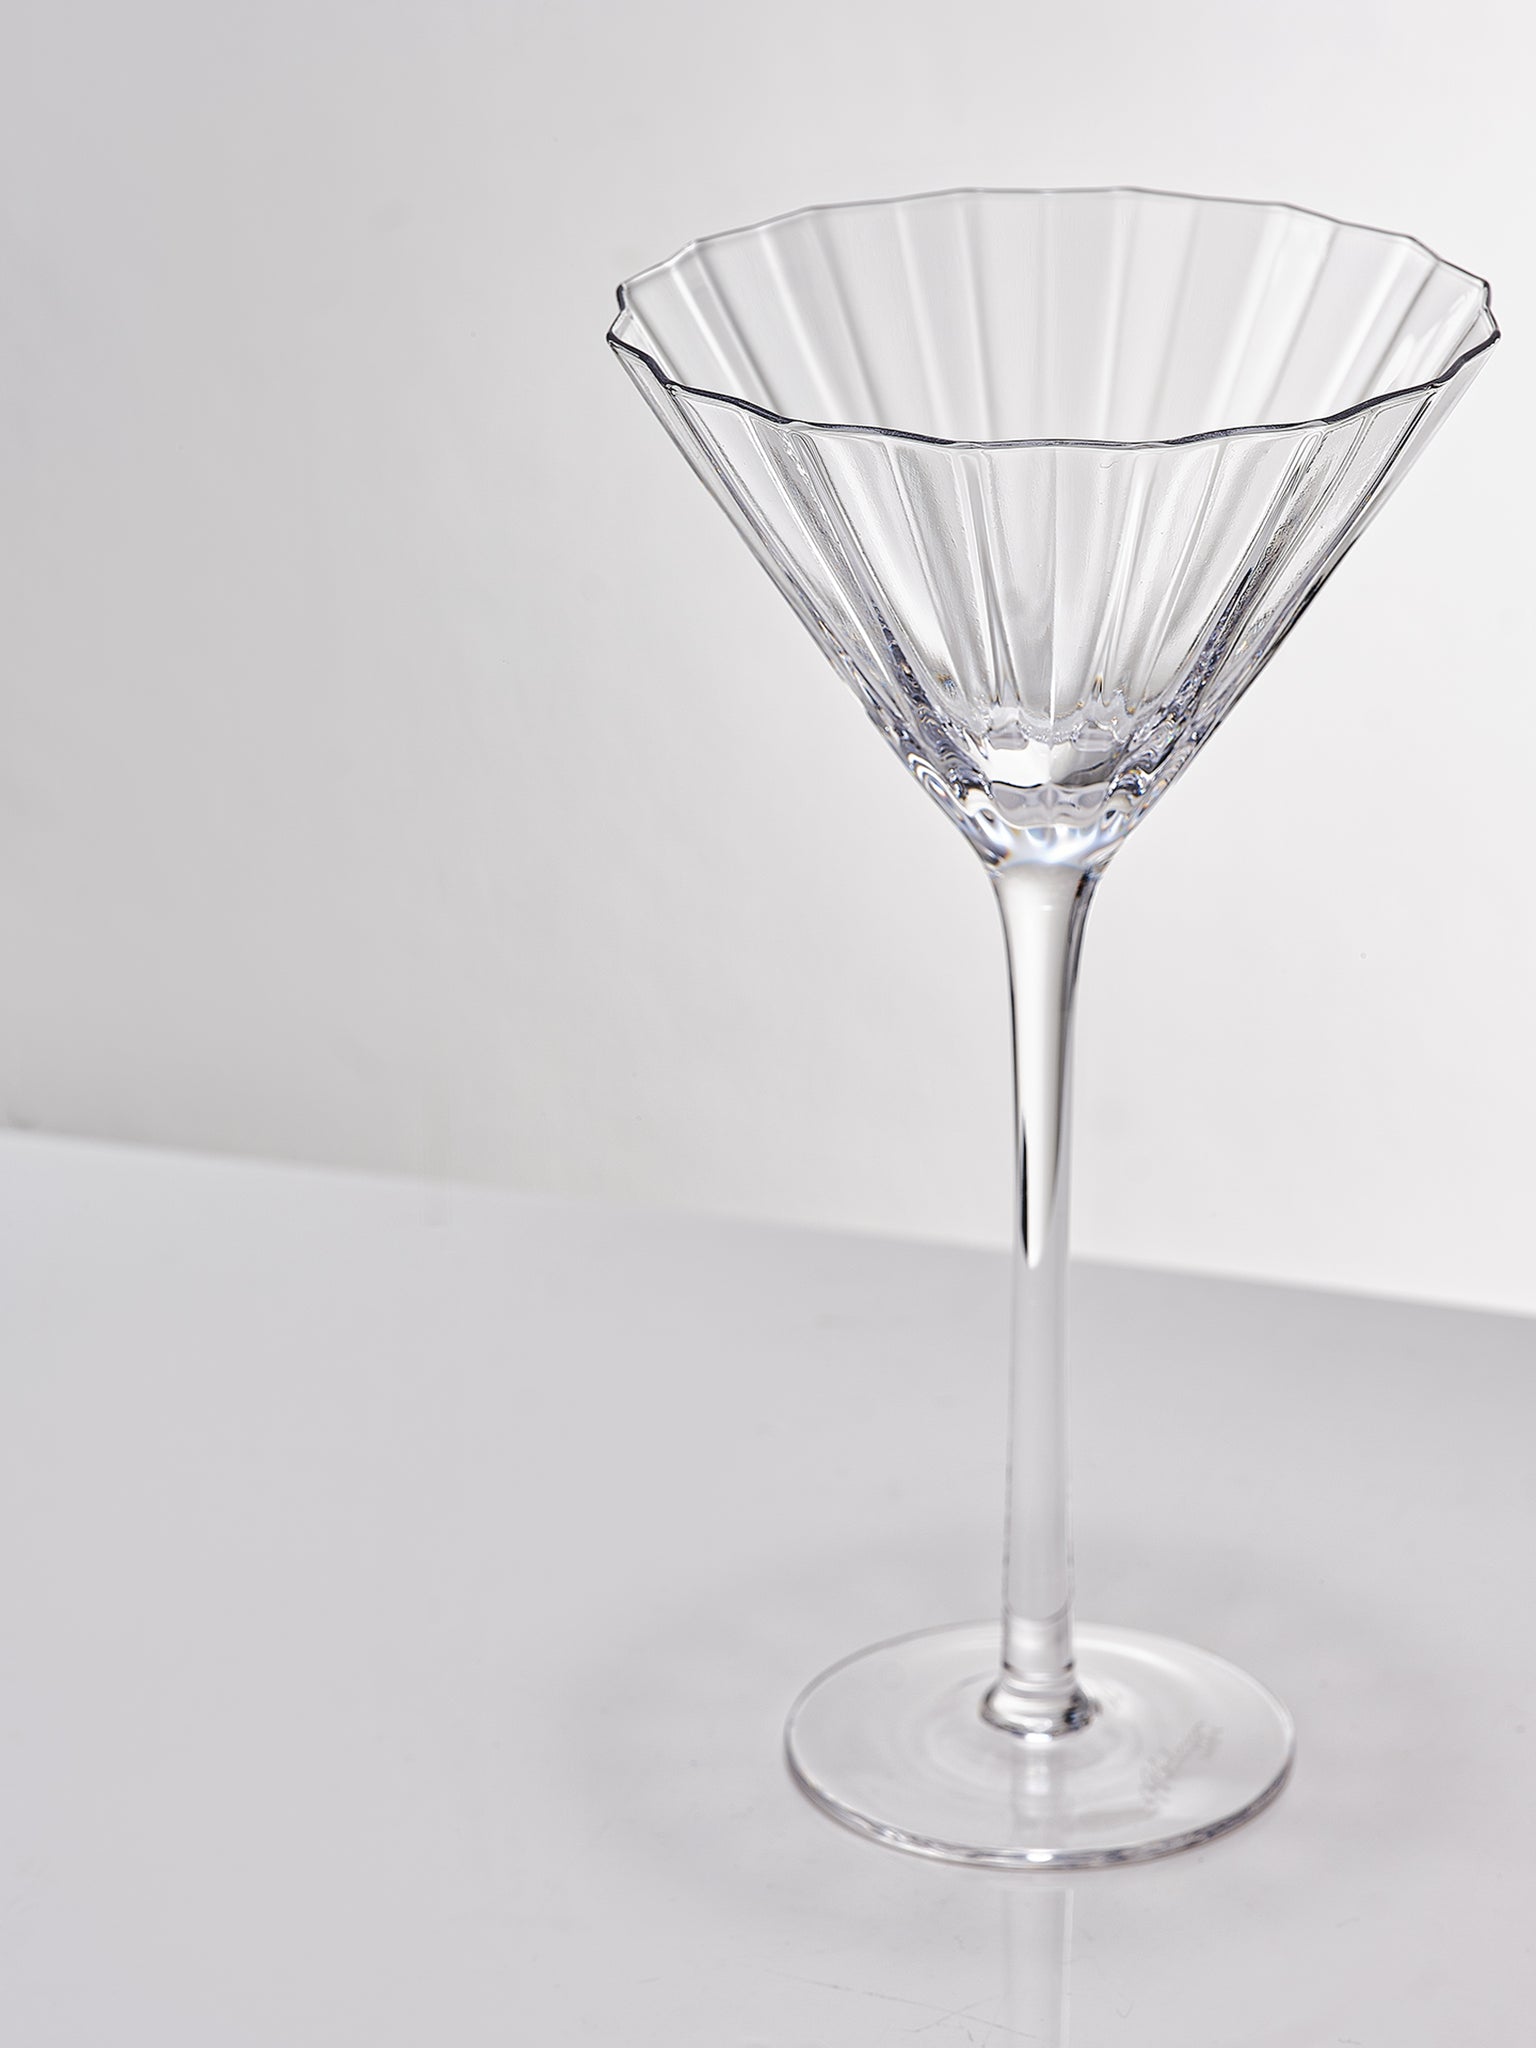 Cullinan Martini Glasses - modernismdesigns